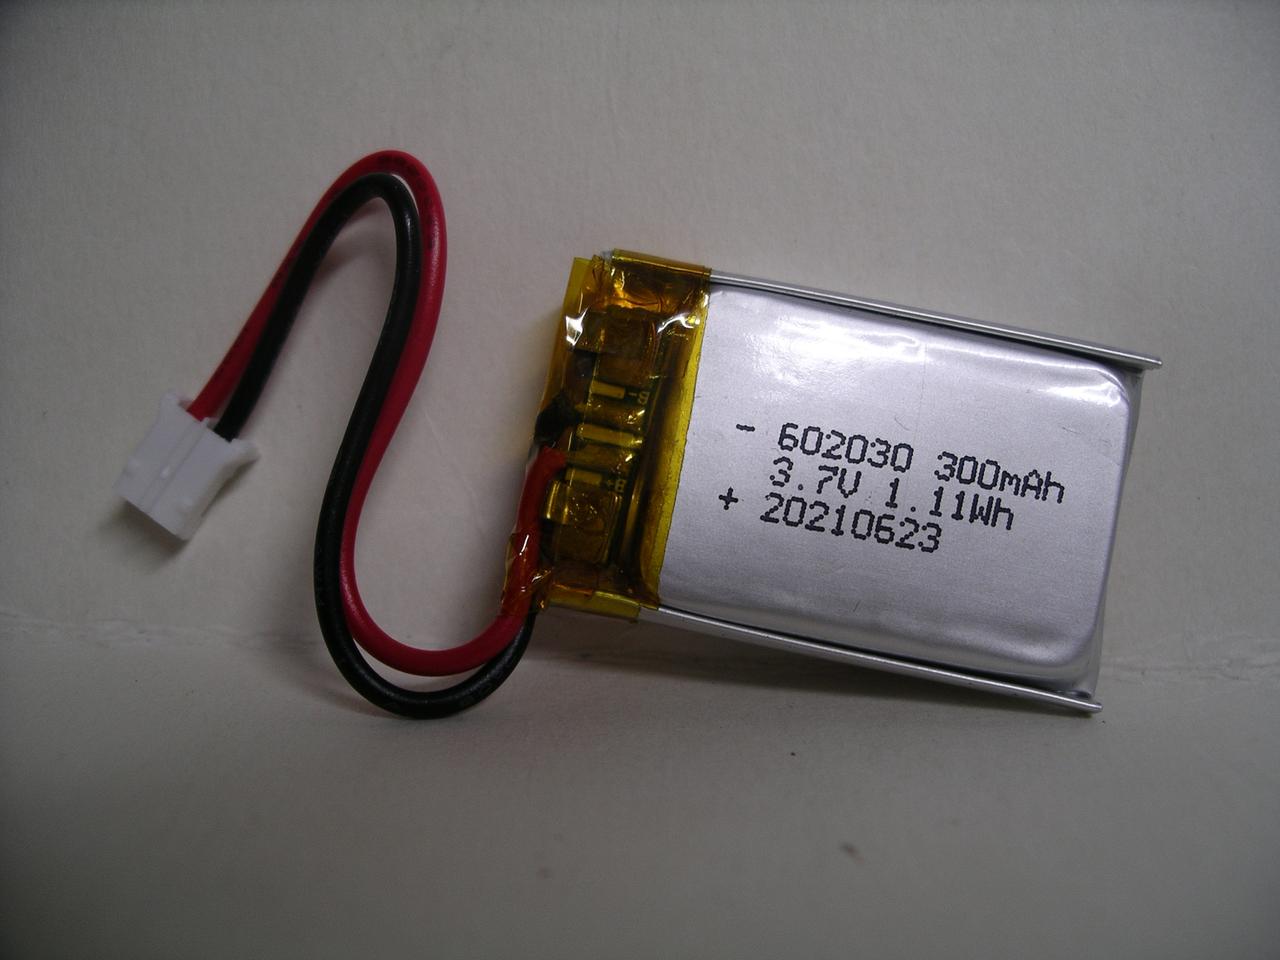 Аккумулятор 602030 , 300mAh 3.7V  Li-pol  литий-полимерный